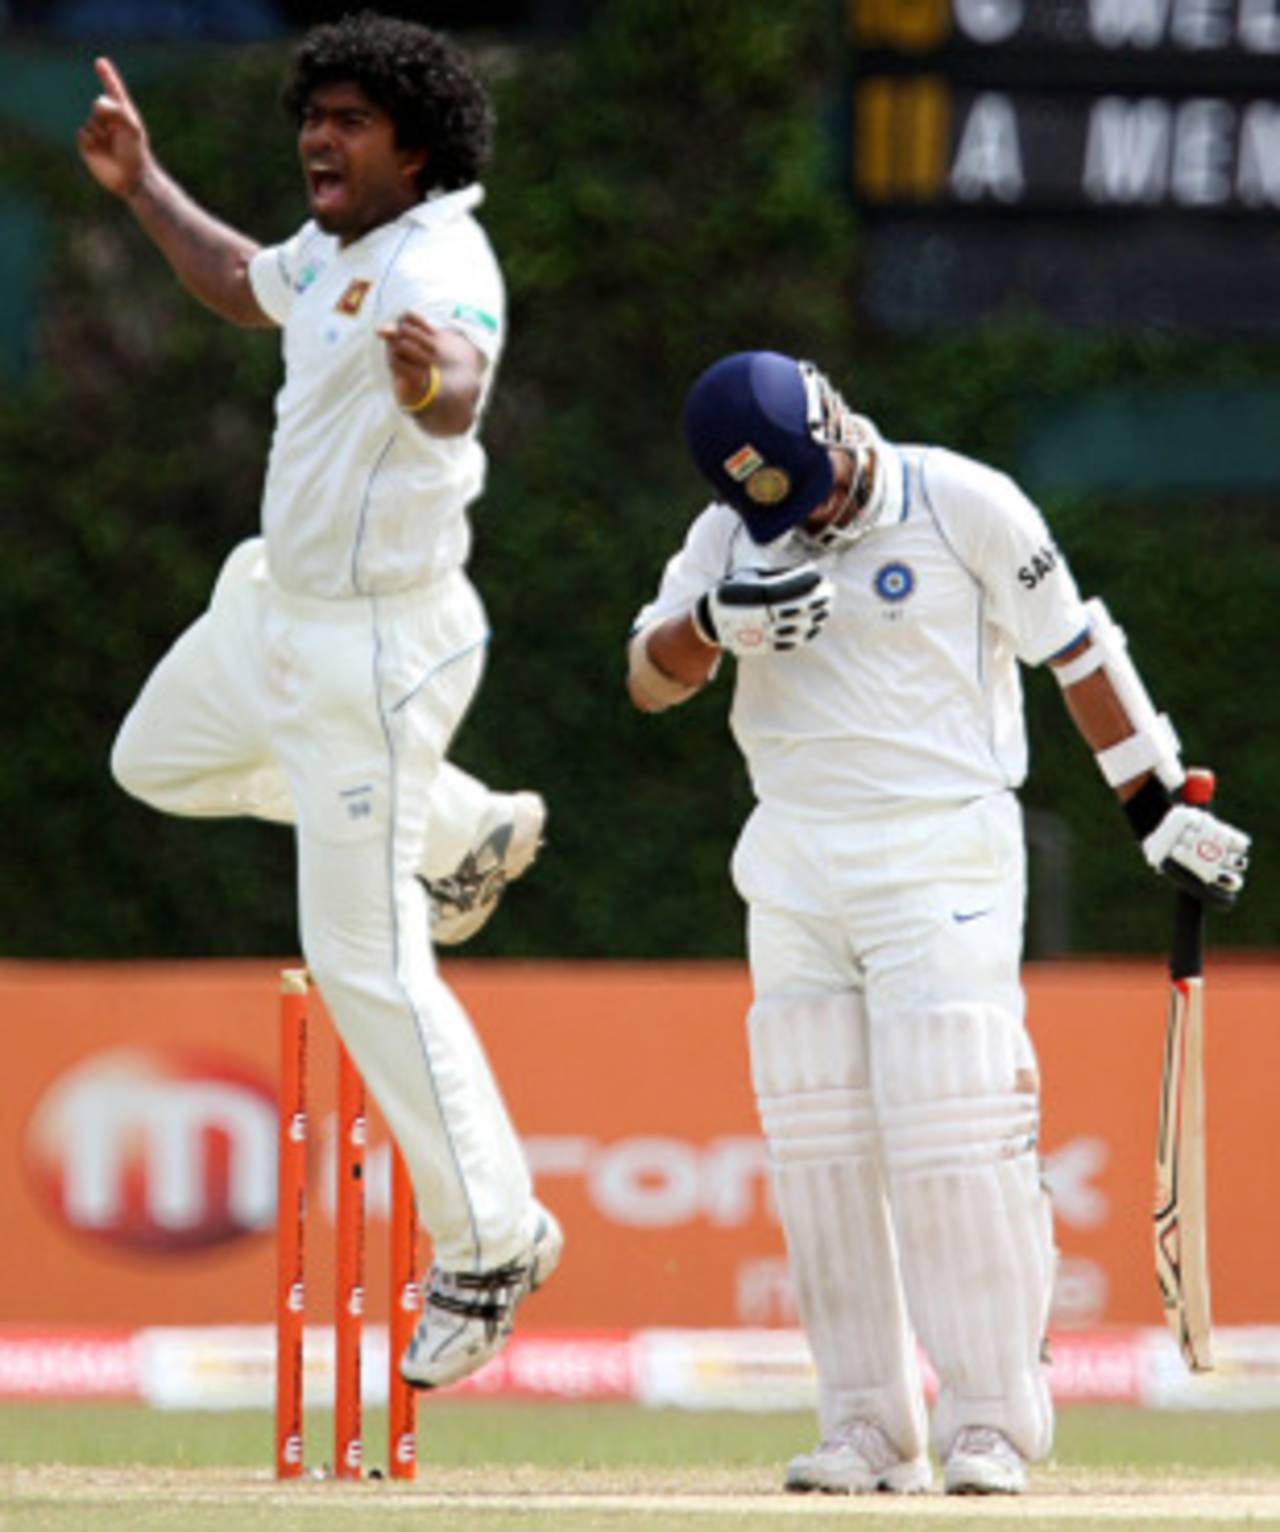 Lasith Malinga dismissed Sachin Tendulkar for 41 to reach the 100-wicket mark&nbsp;&nbsp;&bull;&nbsp;&nbsp;Cameraworx/Live Images